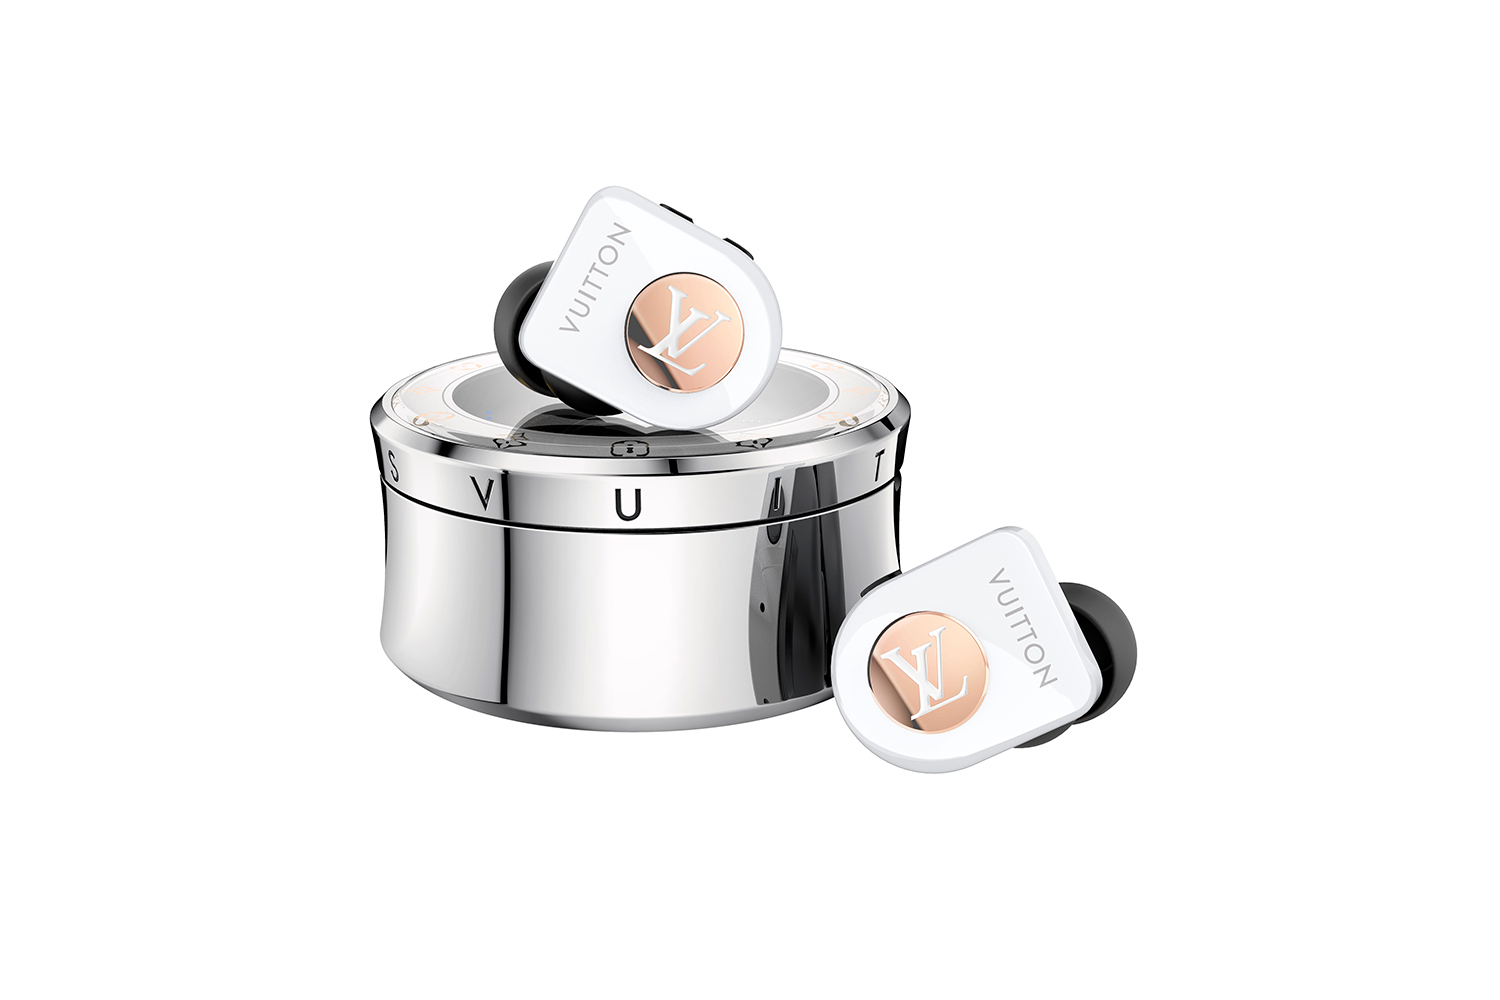 Most Expensive Bluetooth Earphones, 81,550₹, Louis Vuitton Horizon  Unboxing